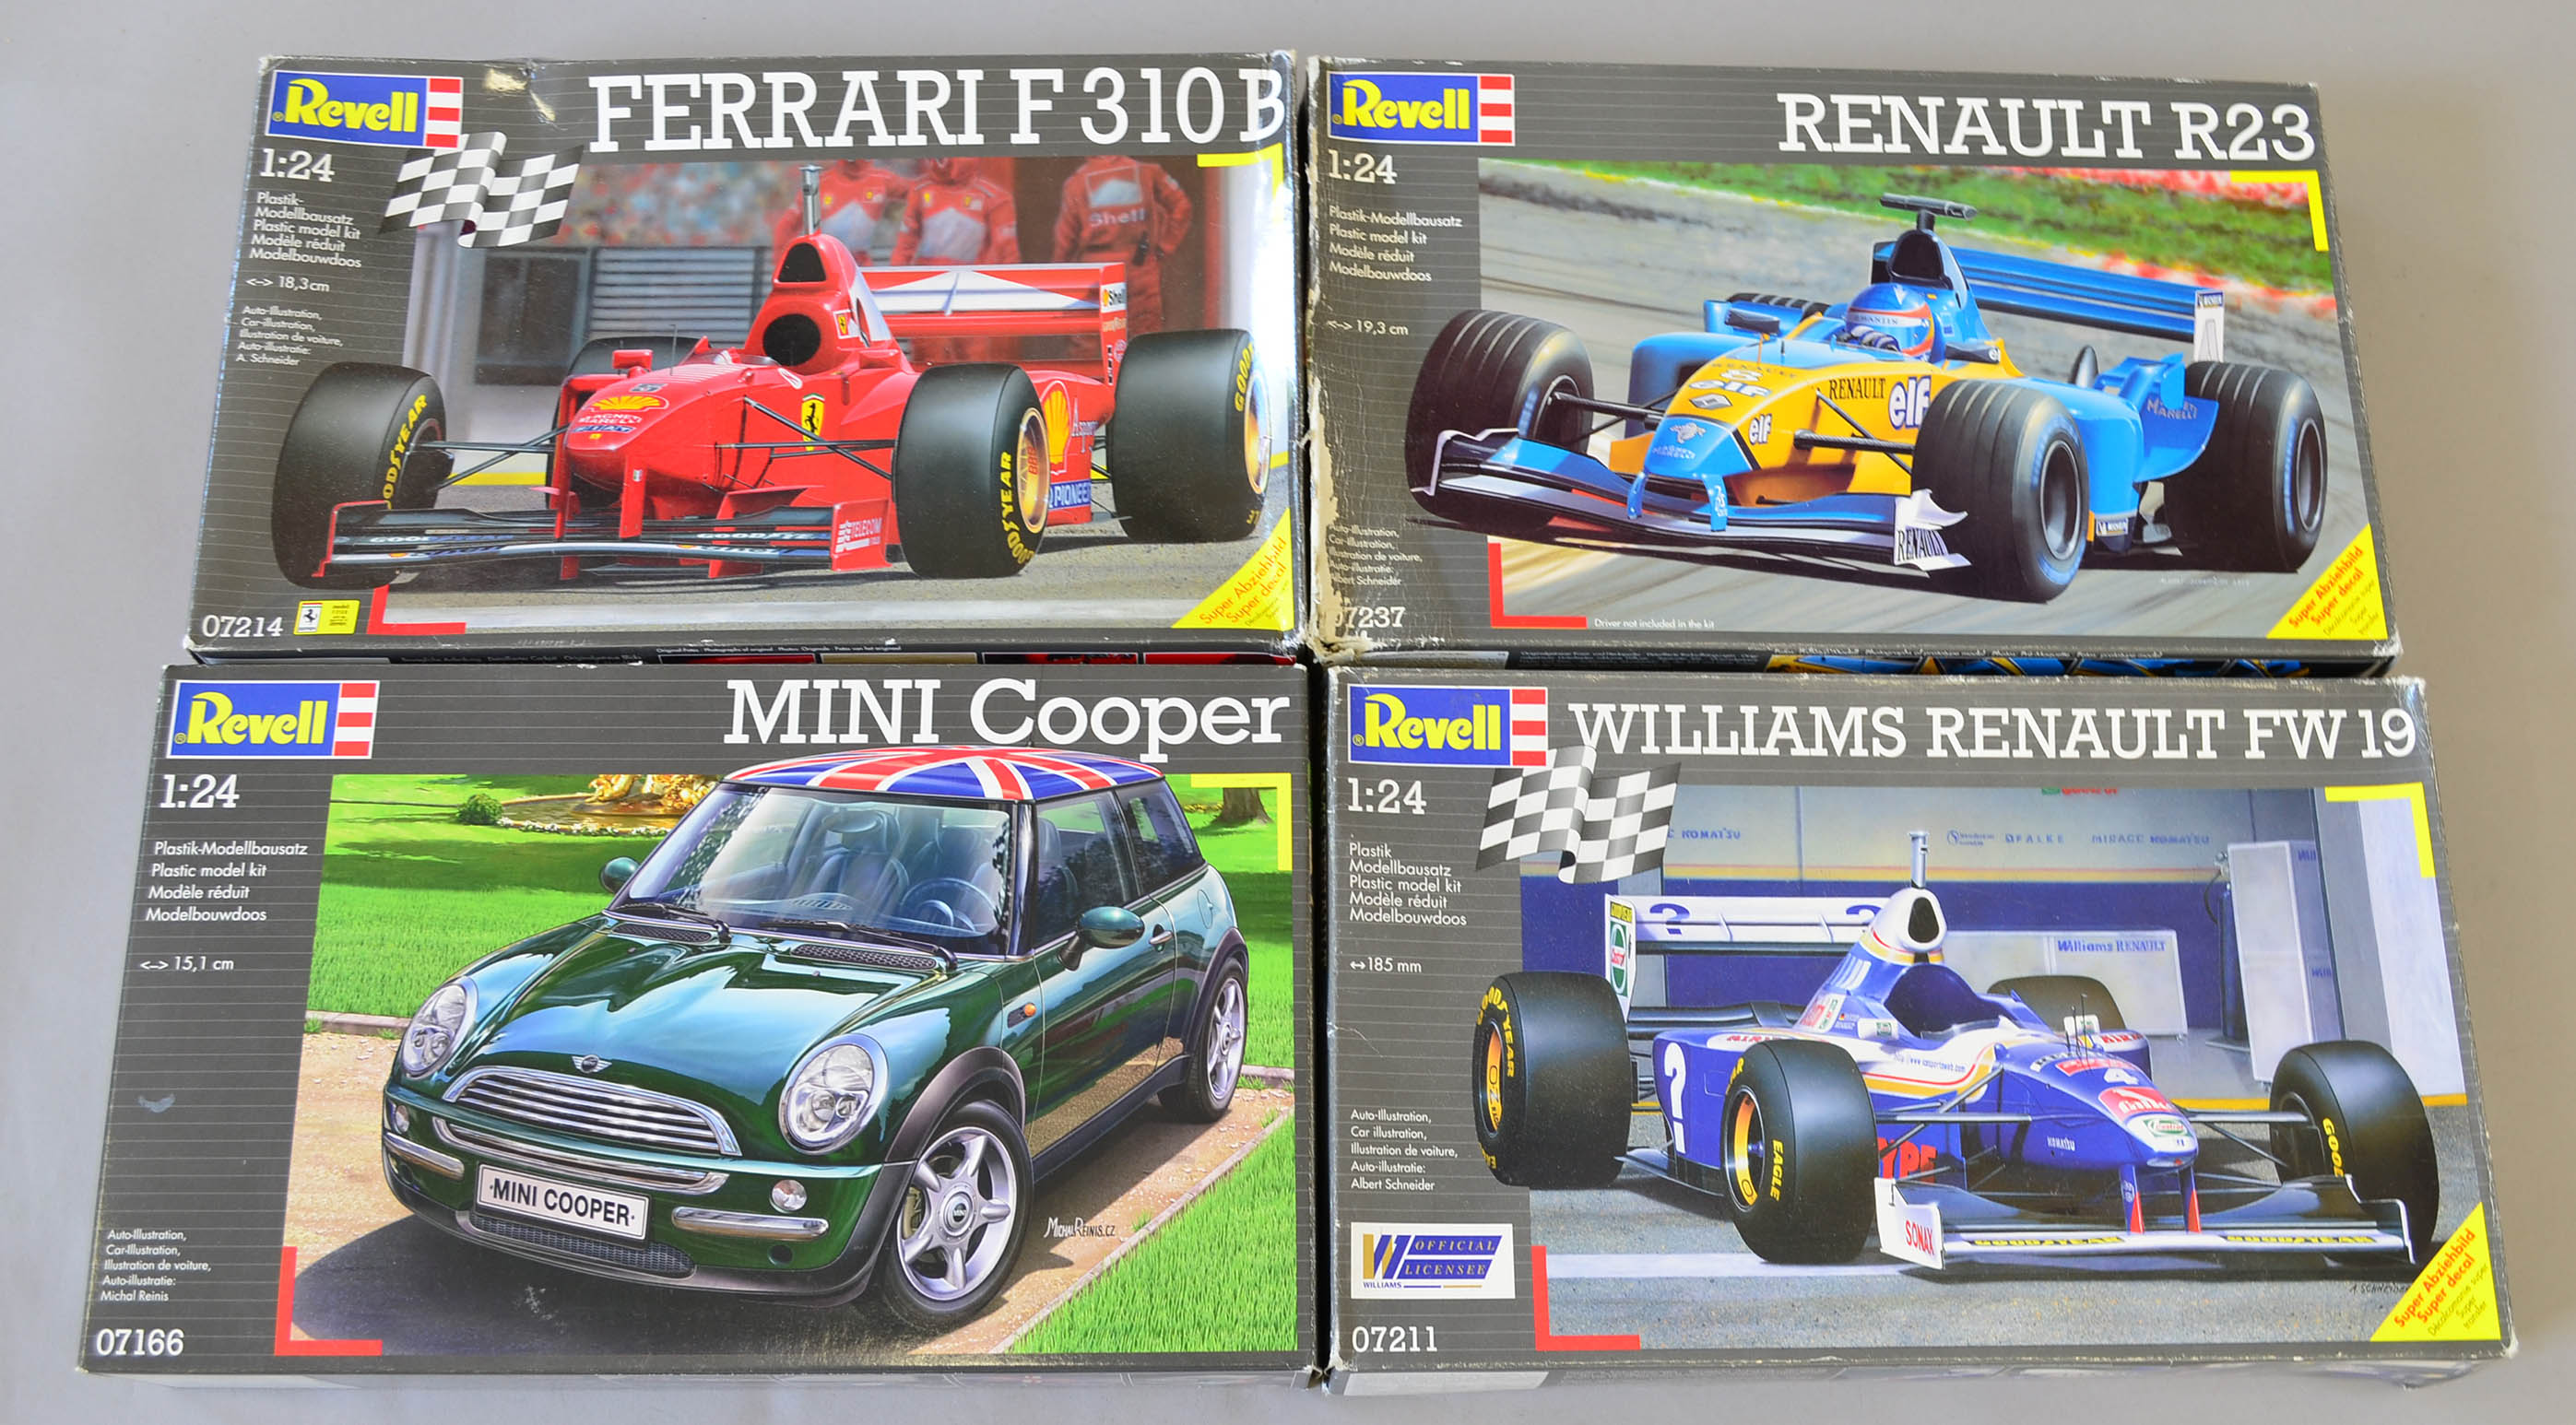 Four Revell plastic model kits, all cars: 07214 Ferrari F310B; 07166 Mini Cooper; 07237 Renault